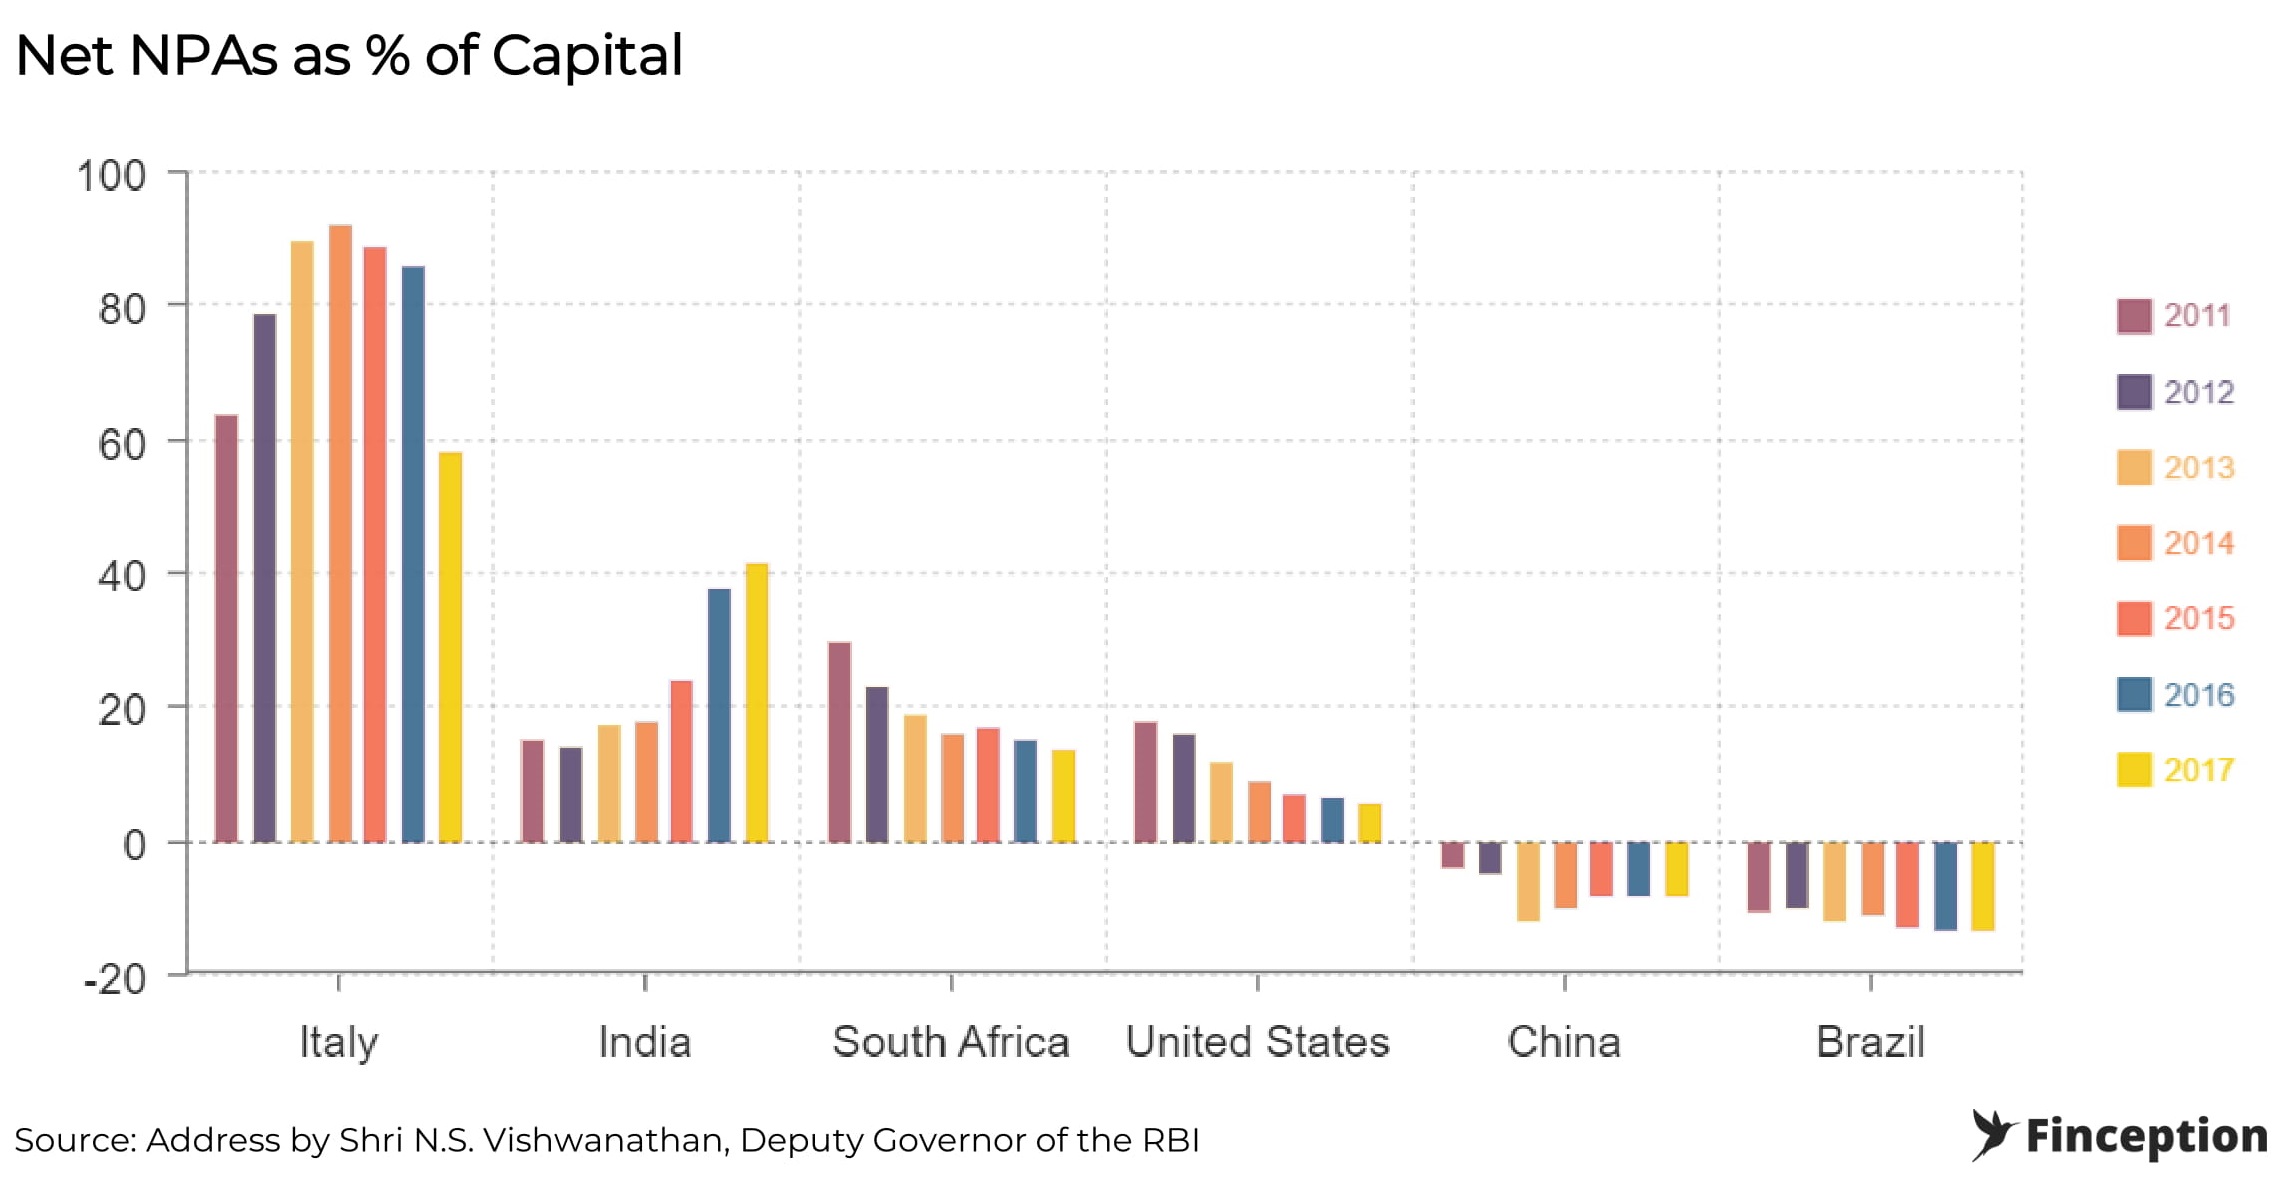 India's Net NPAs as % of bank's capital is increasing